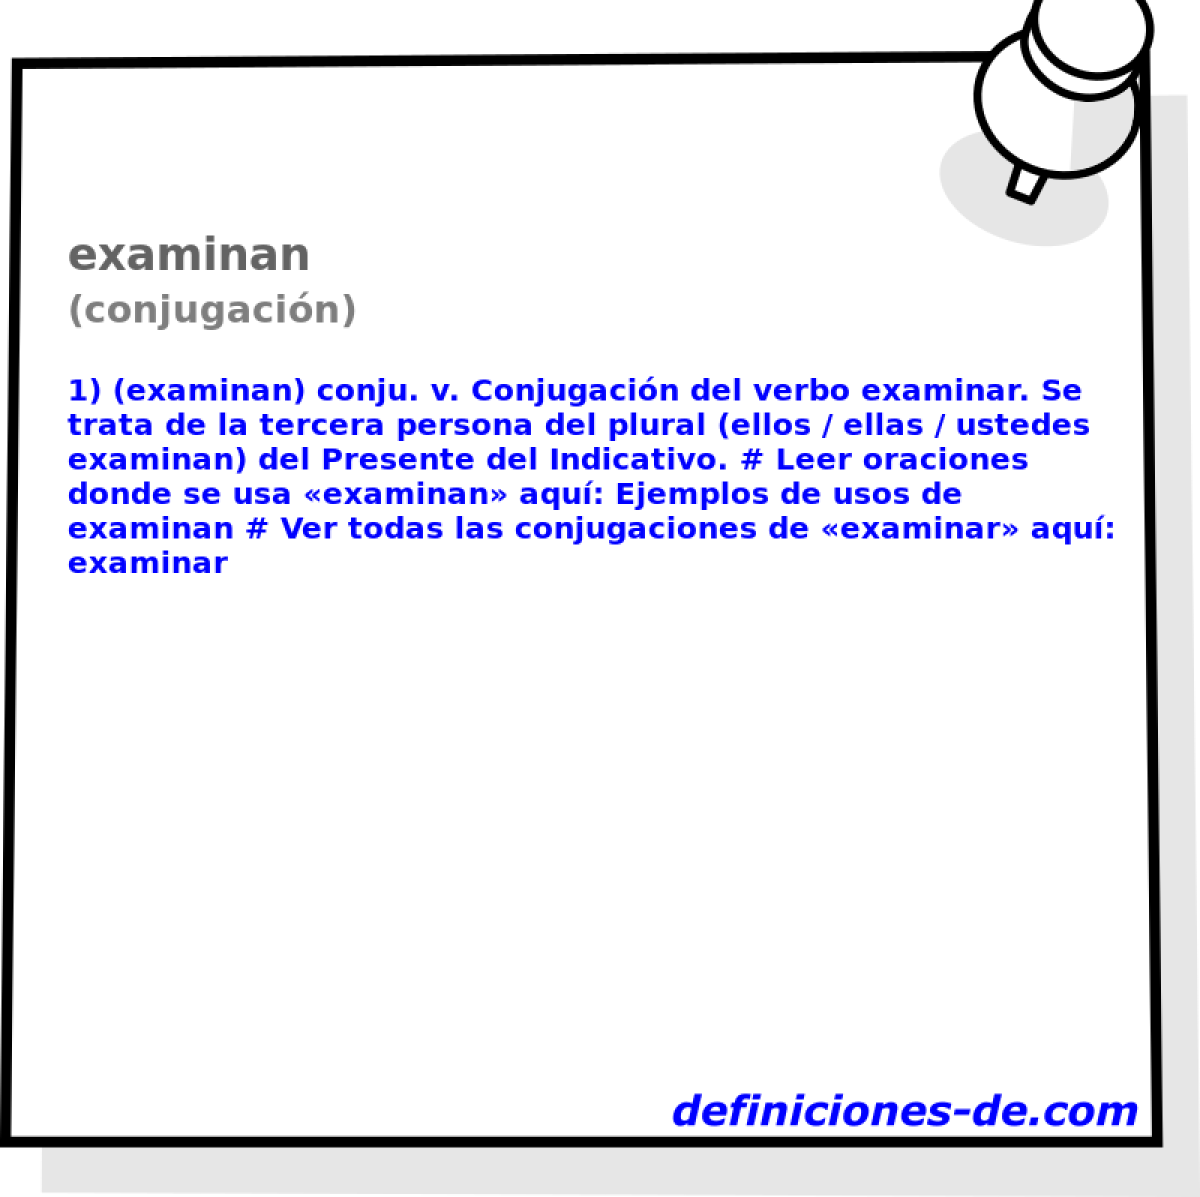 examinan (conjugacin)